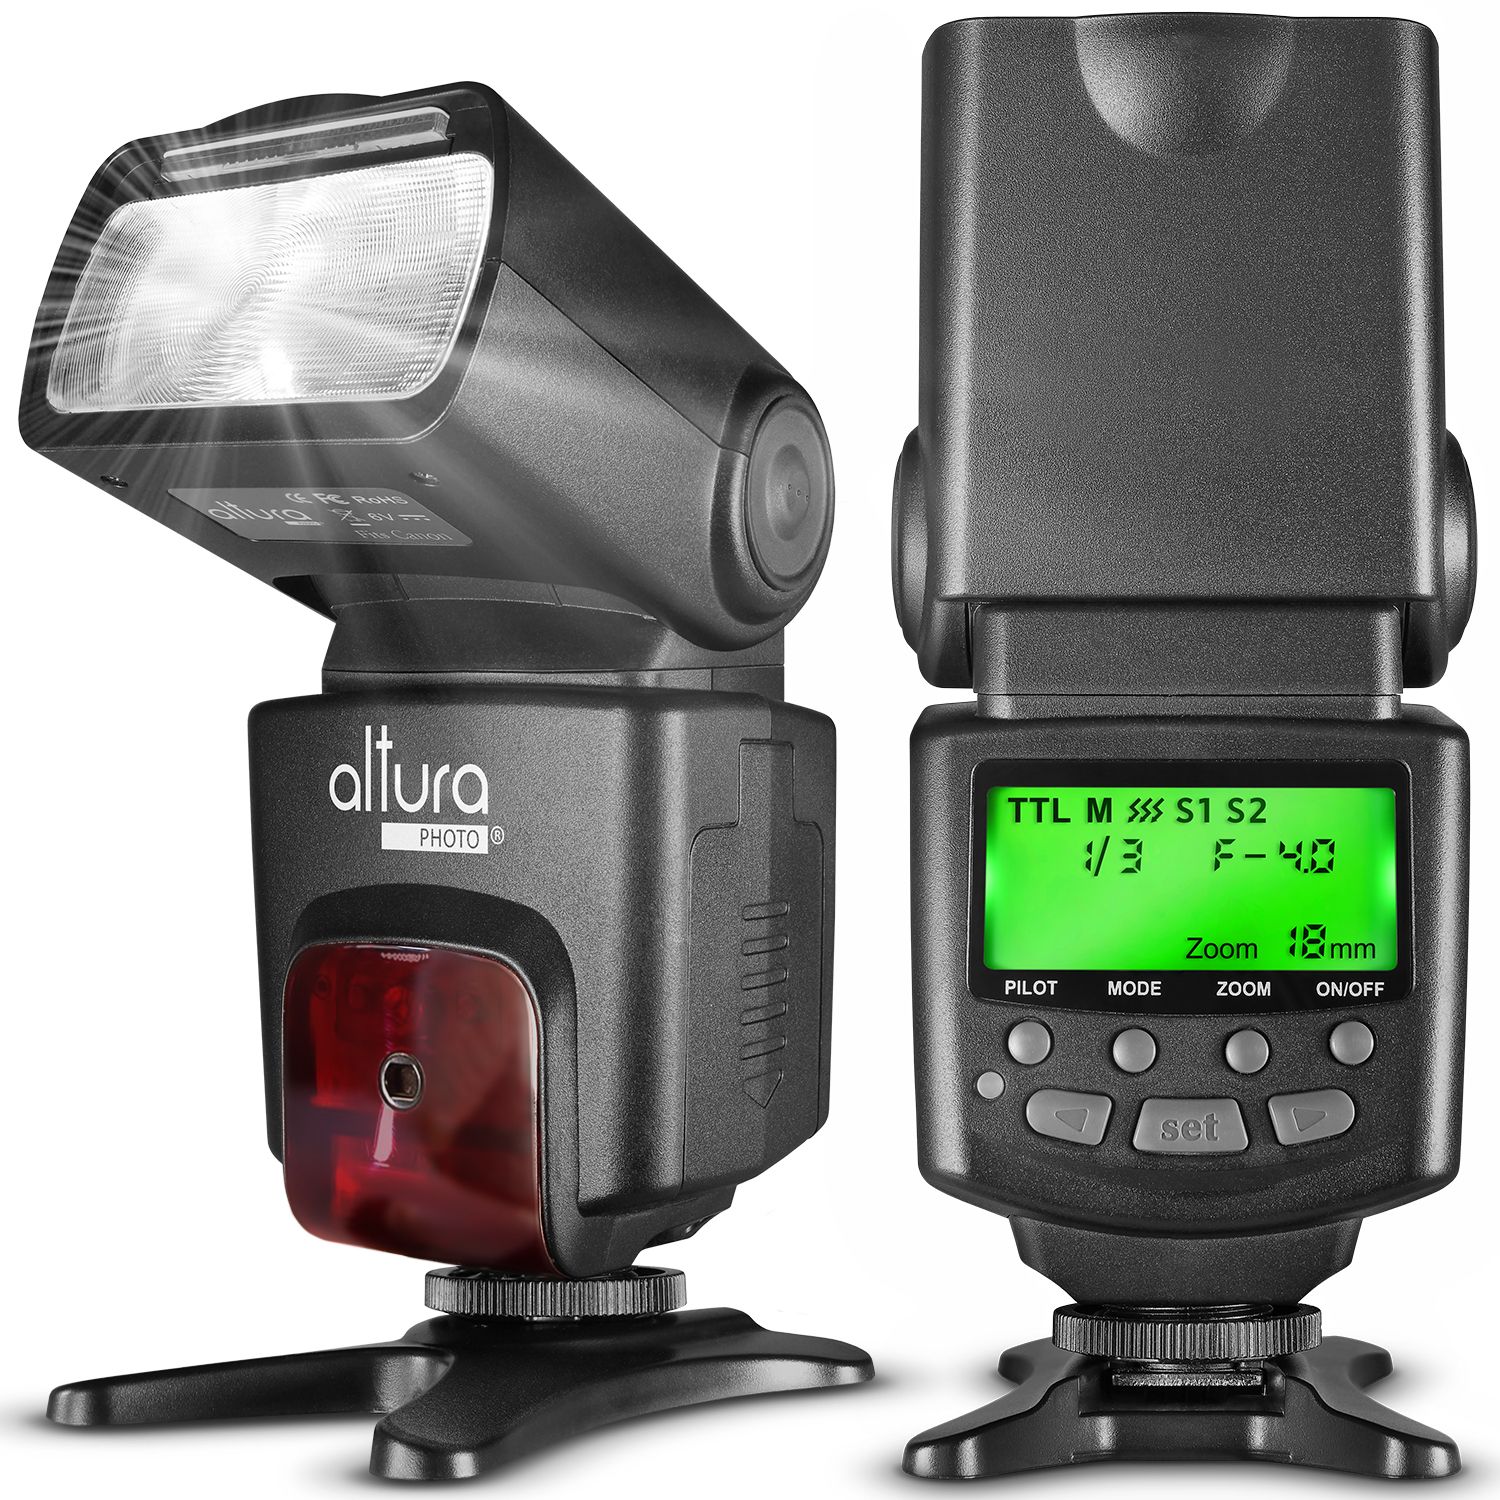 vier keer Hijgend ik heb dorst Altura Photo E-TTL Auto-Focus Dedicated Flash (AP-C1001) for Canon DSLR  Cameras